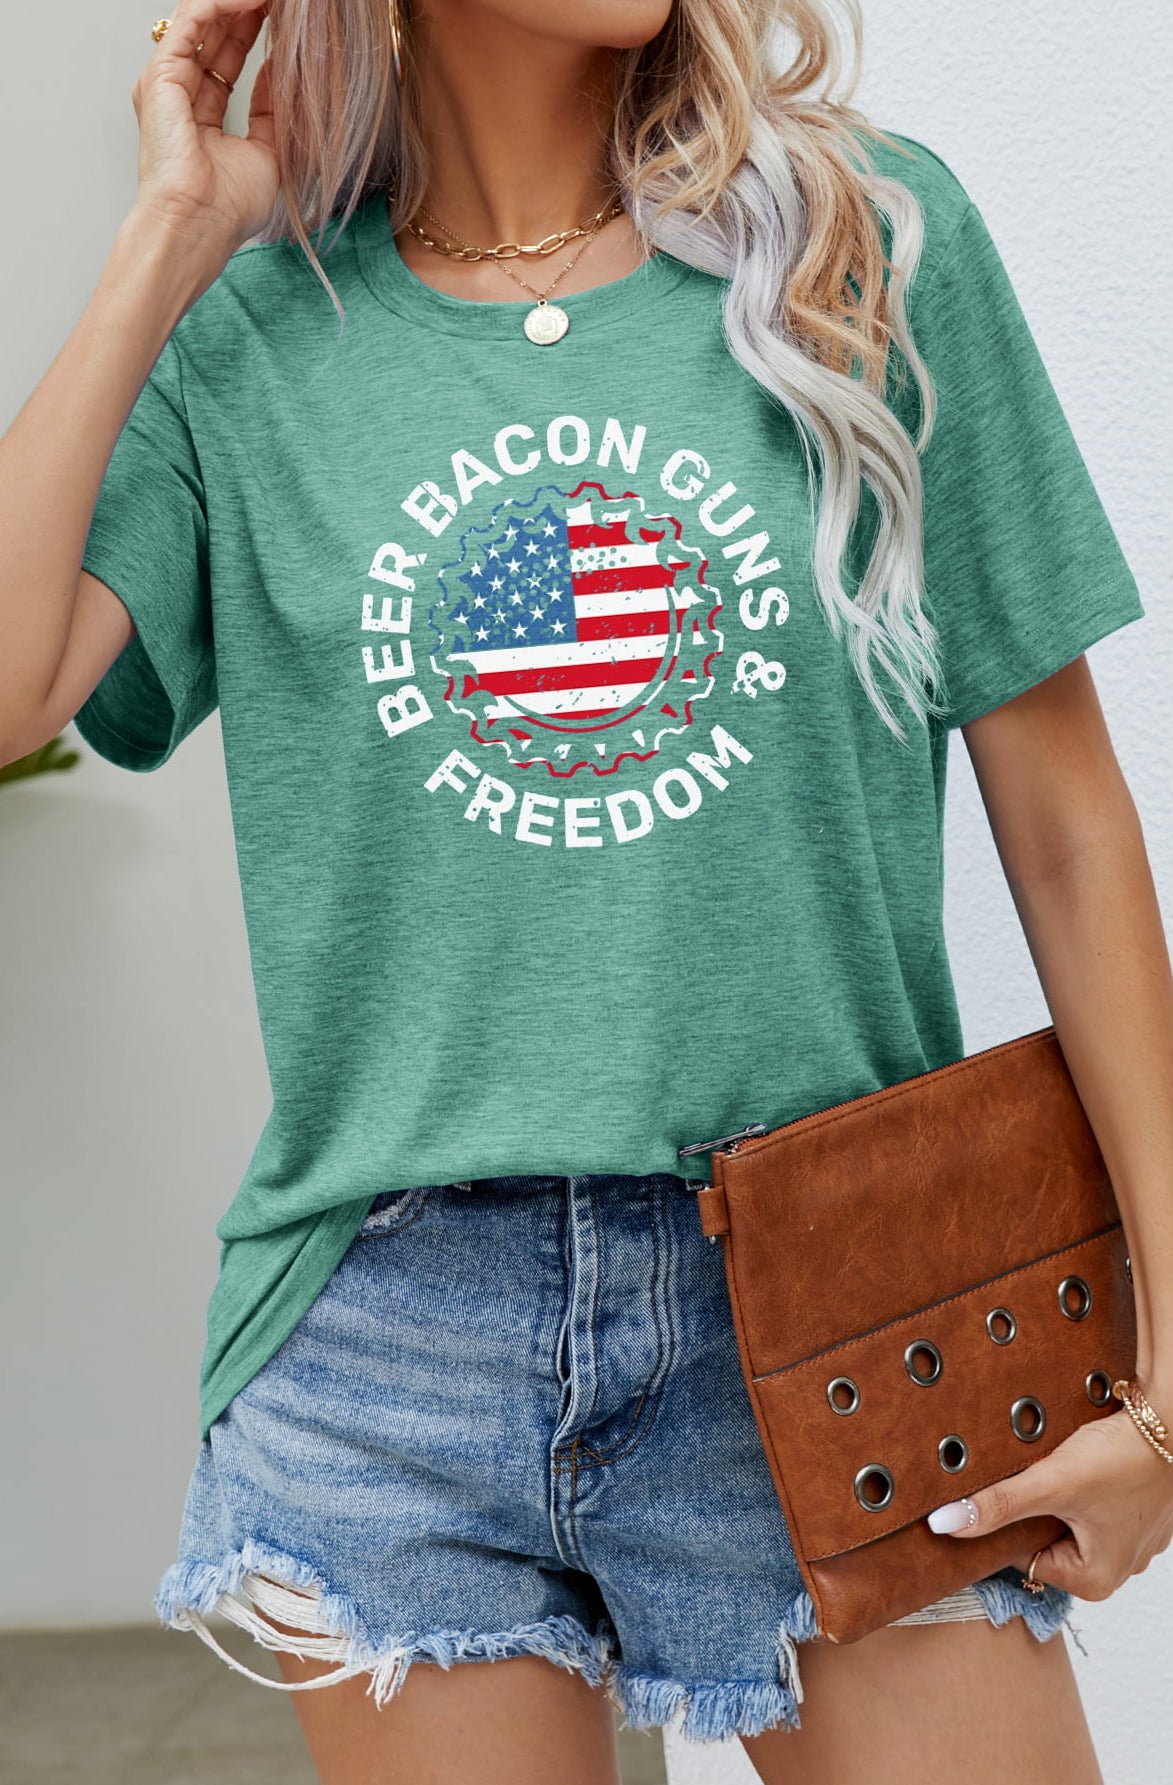 BEER BACON GUNS & FREEDOM US Flag Graphic Tee Trendsi